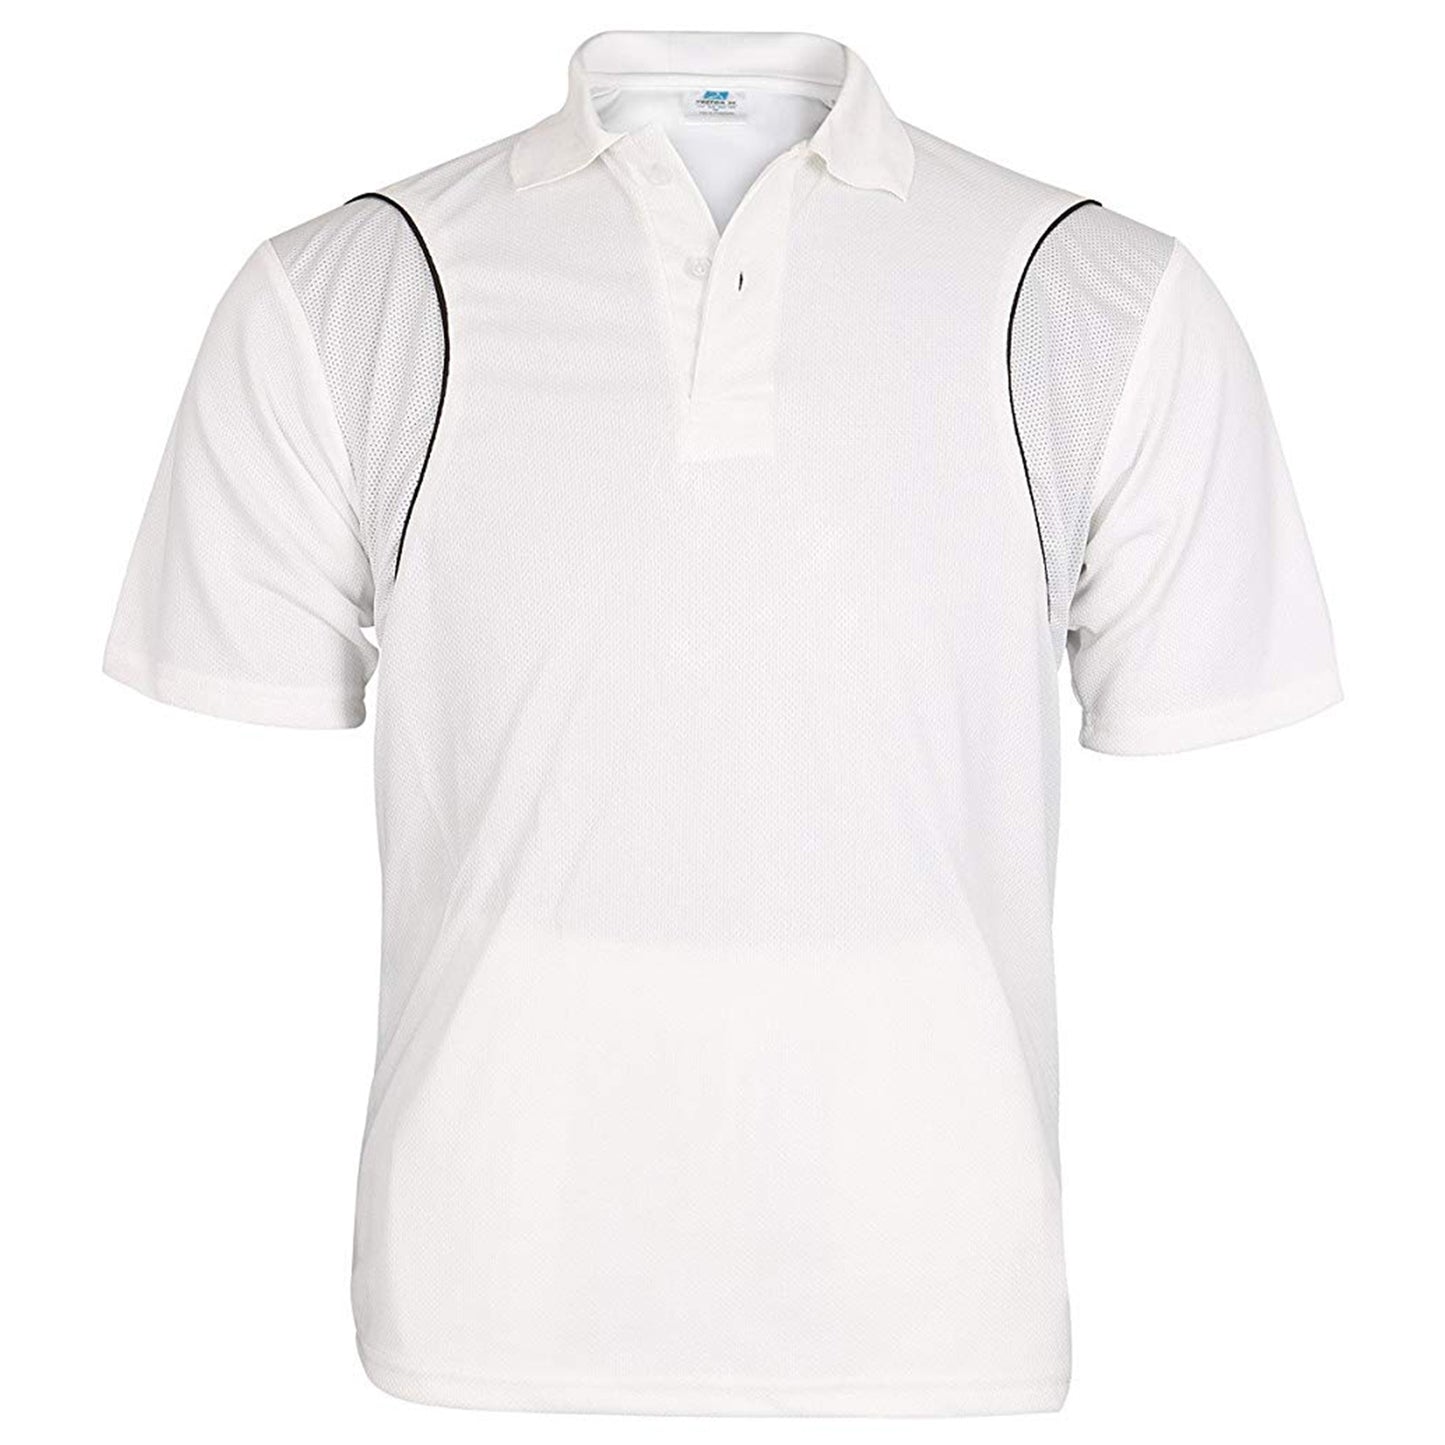 Vector X Striker Cricket T Shirt (Half Sleeves) - Best Price online Prokicksports.com